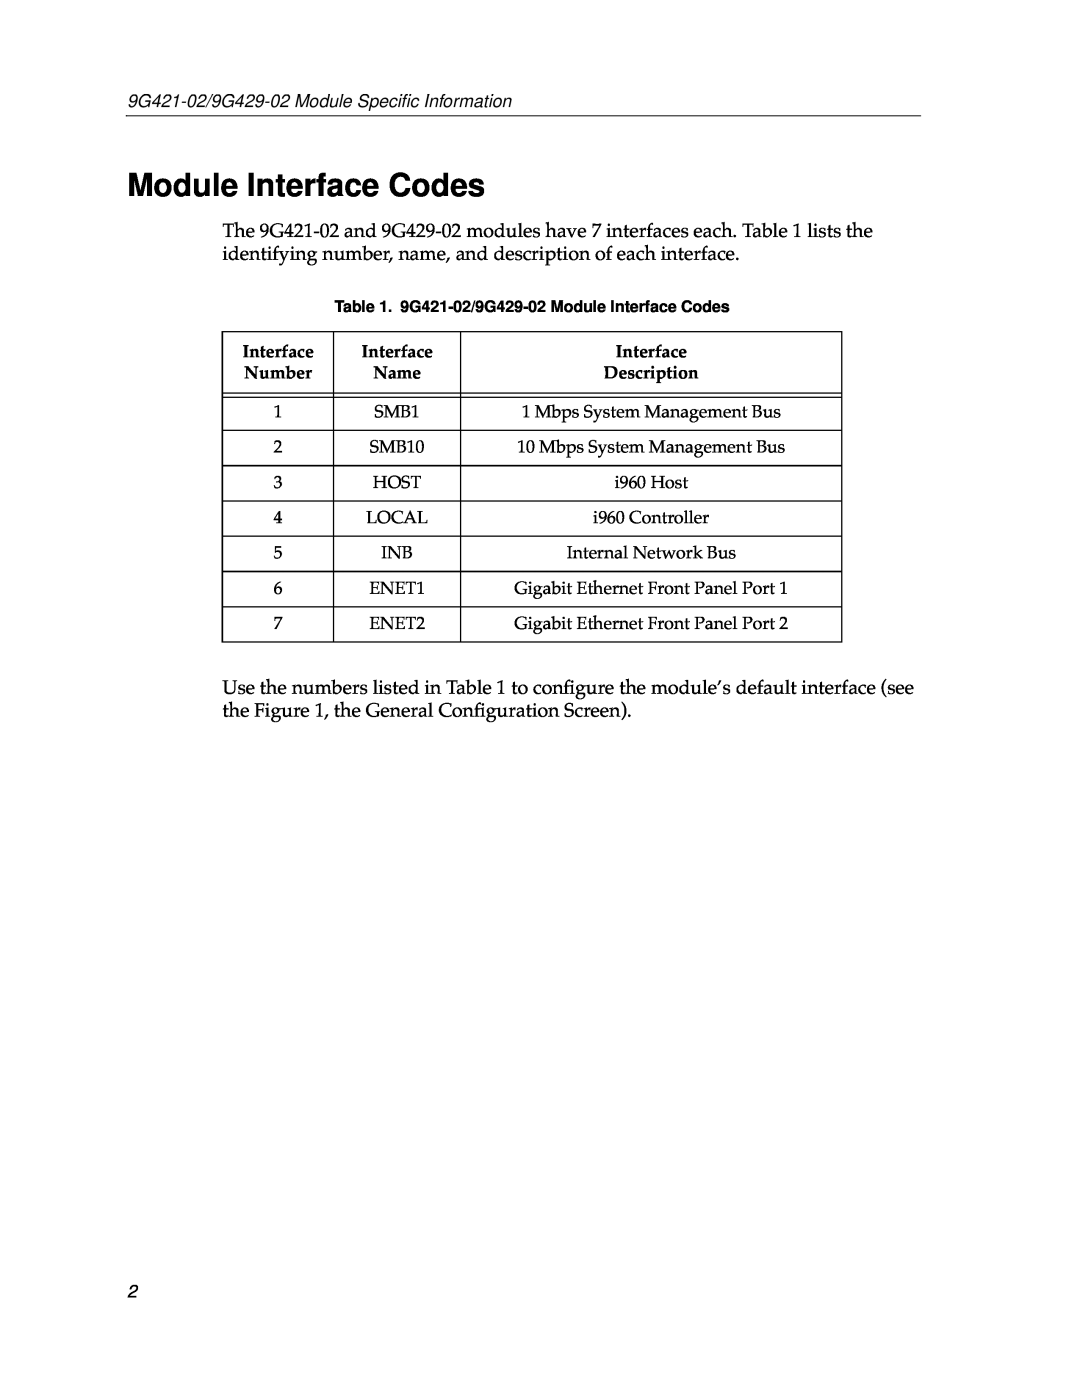 Cabletron Systems appendix Module Interface Codes, 9G421-02/9G429-02 Module Speciﬁc Information 